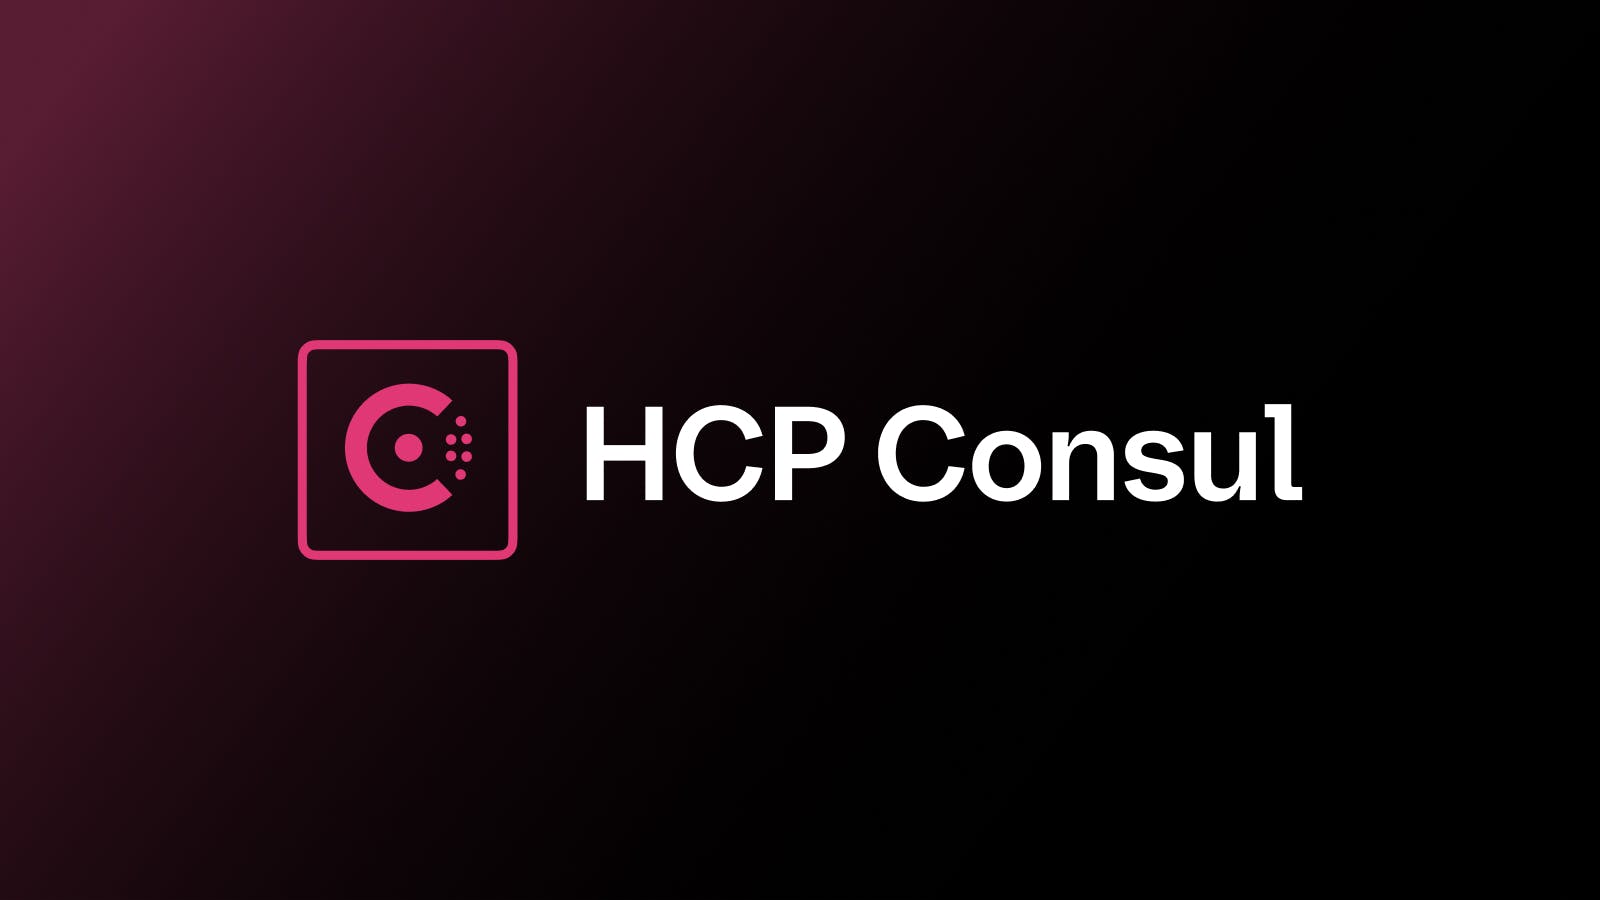 HCP Consul cluster peering enhances multi-cloud connectivity